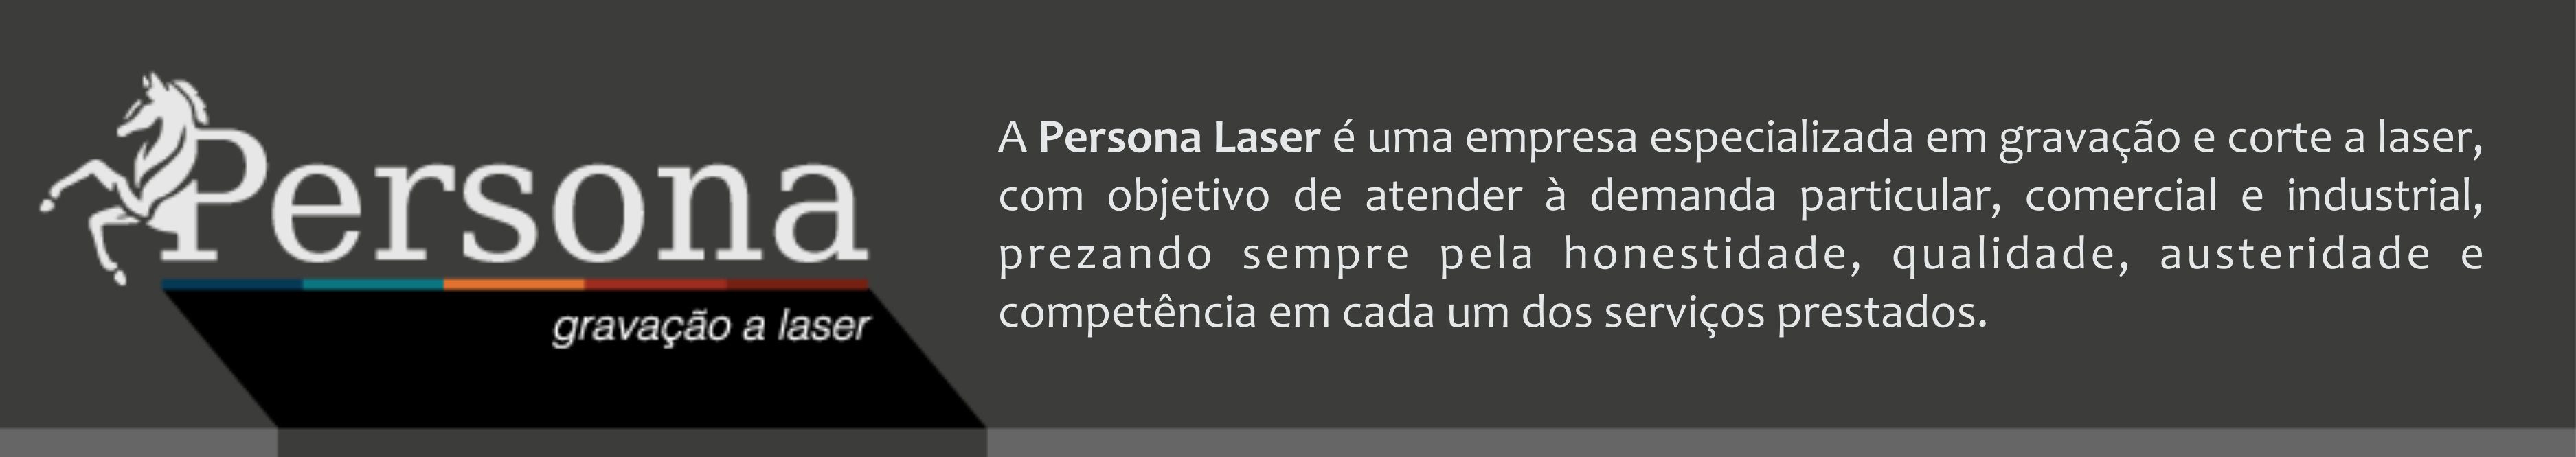 Persona Laser